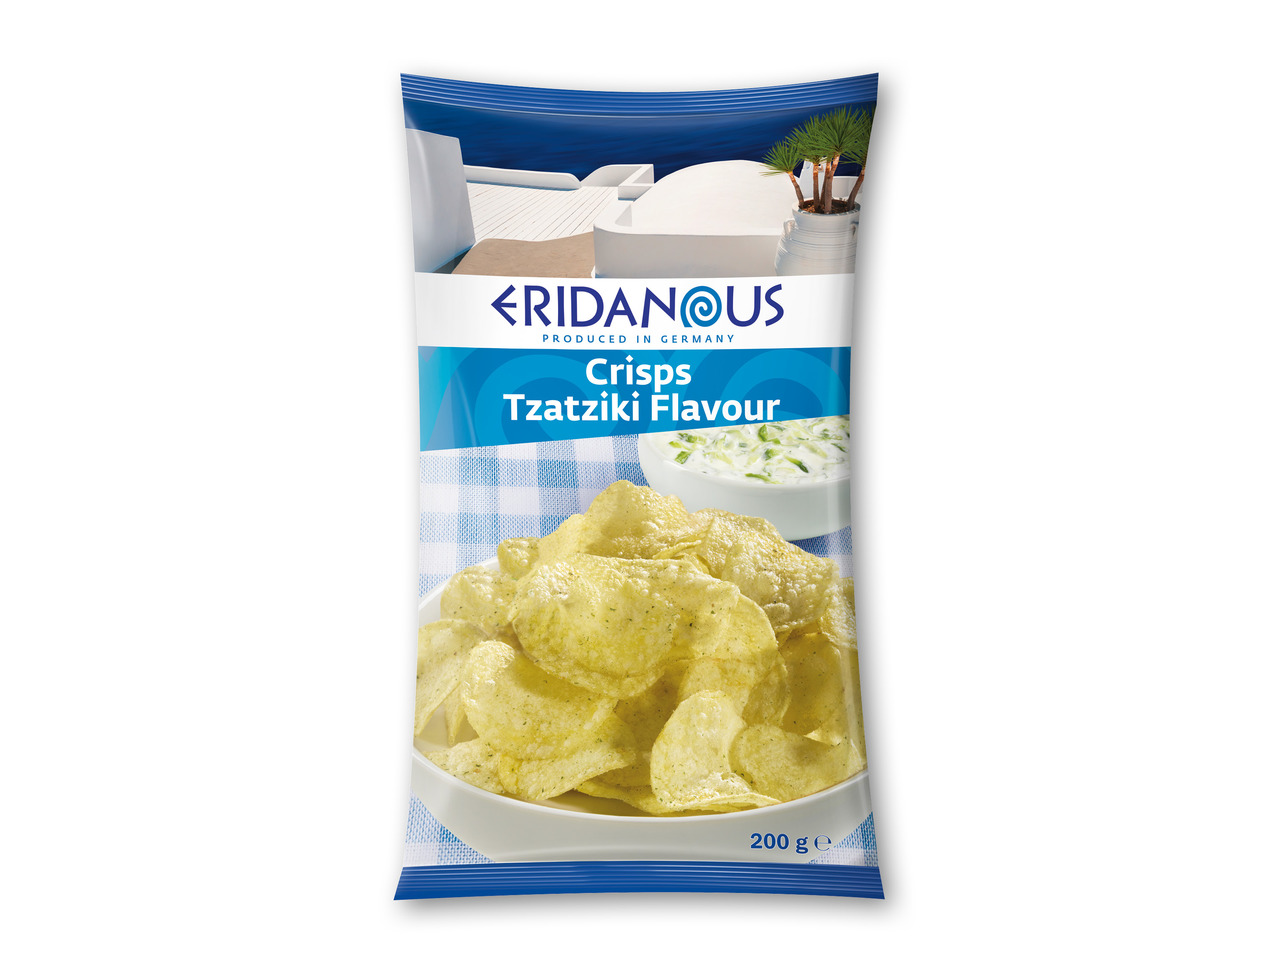 ERIDANOUS Chips